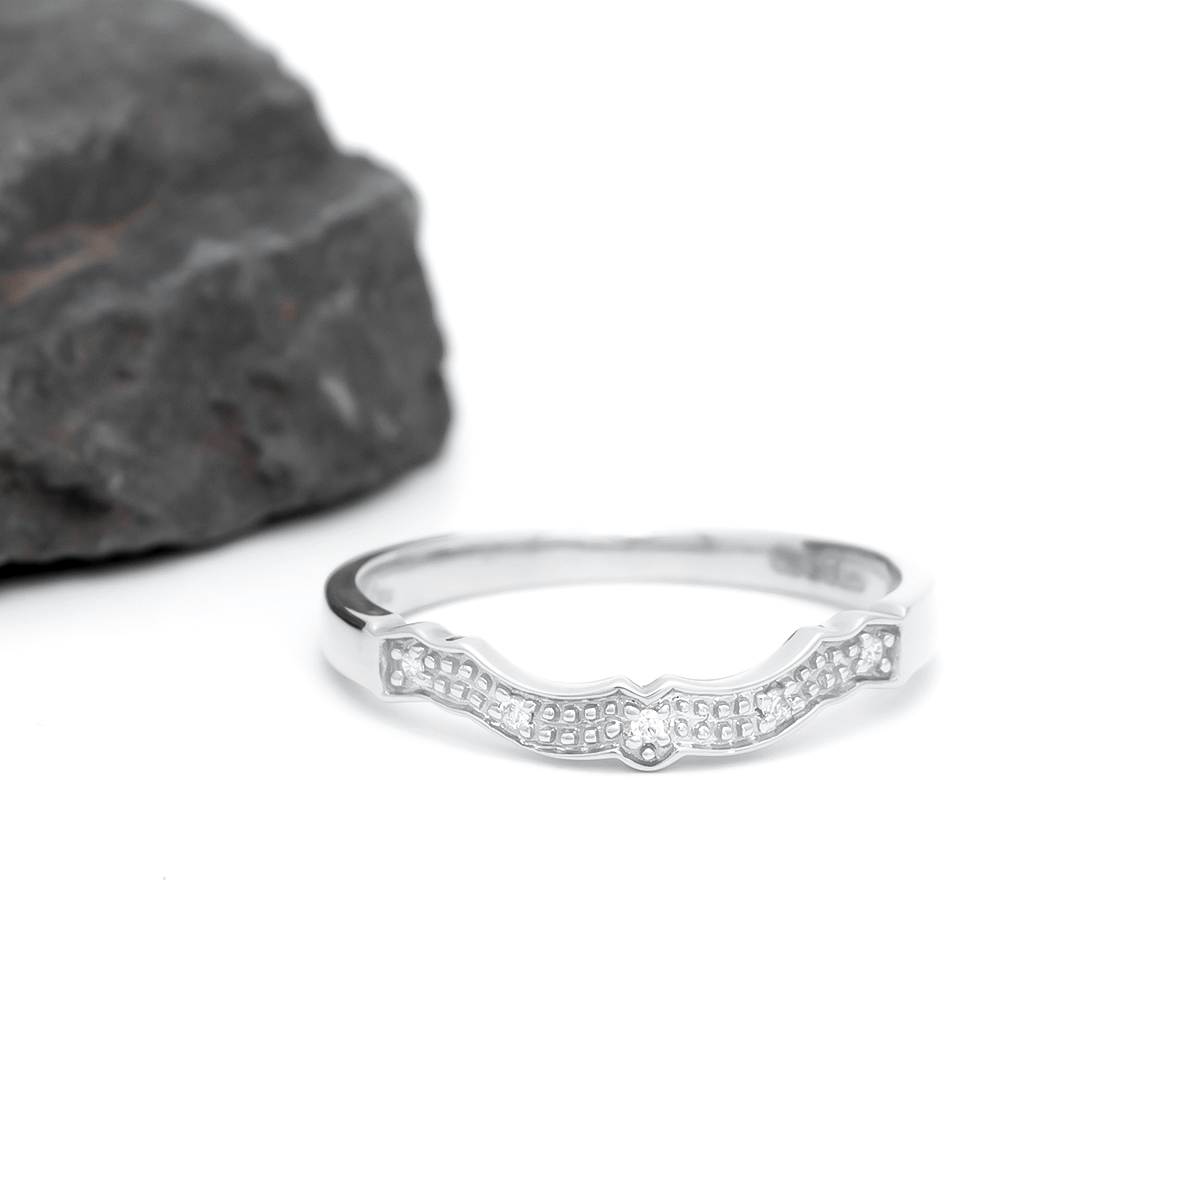 14k White Gold Shaped Wedding Band to Match Engagement Ring